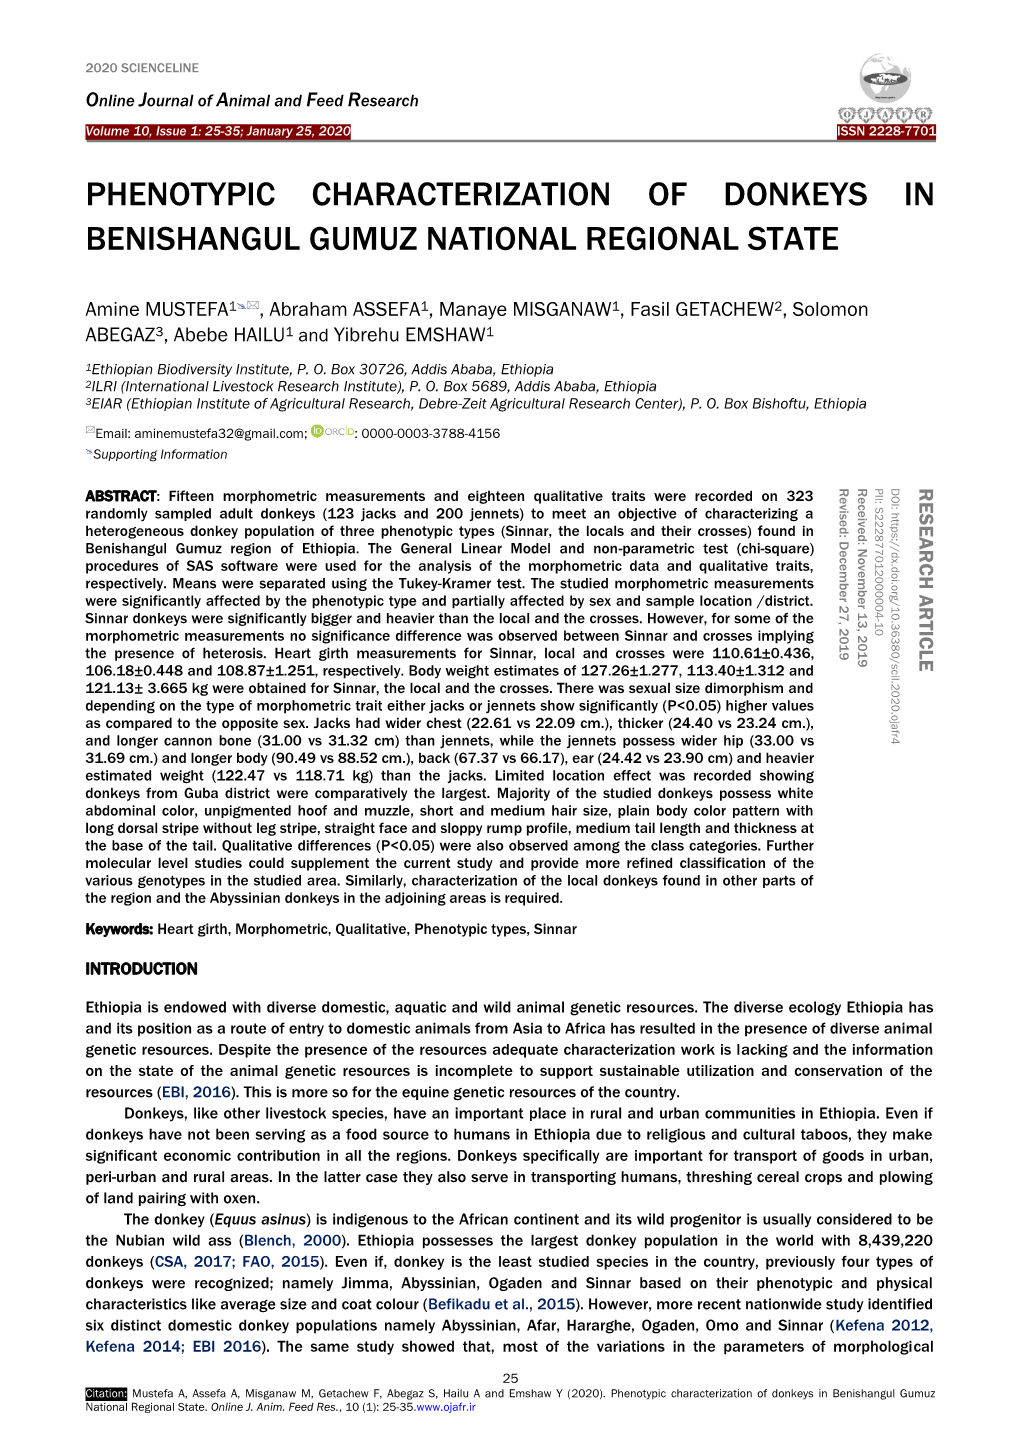 Phenotypic Characterization of Donkeys in Benishangul Gumuz National Regional State